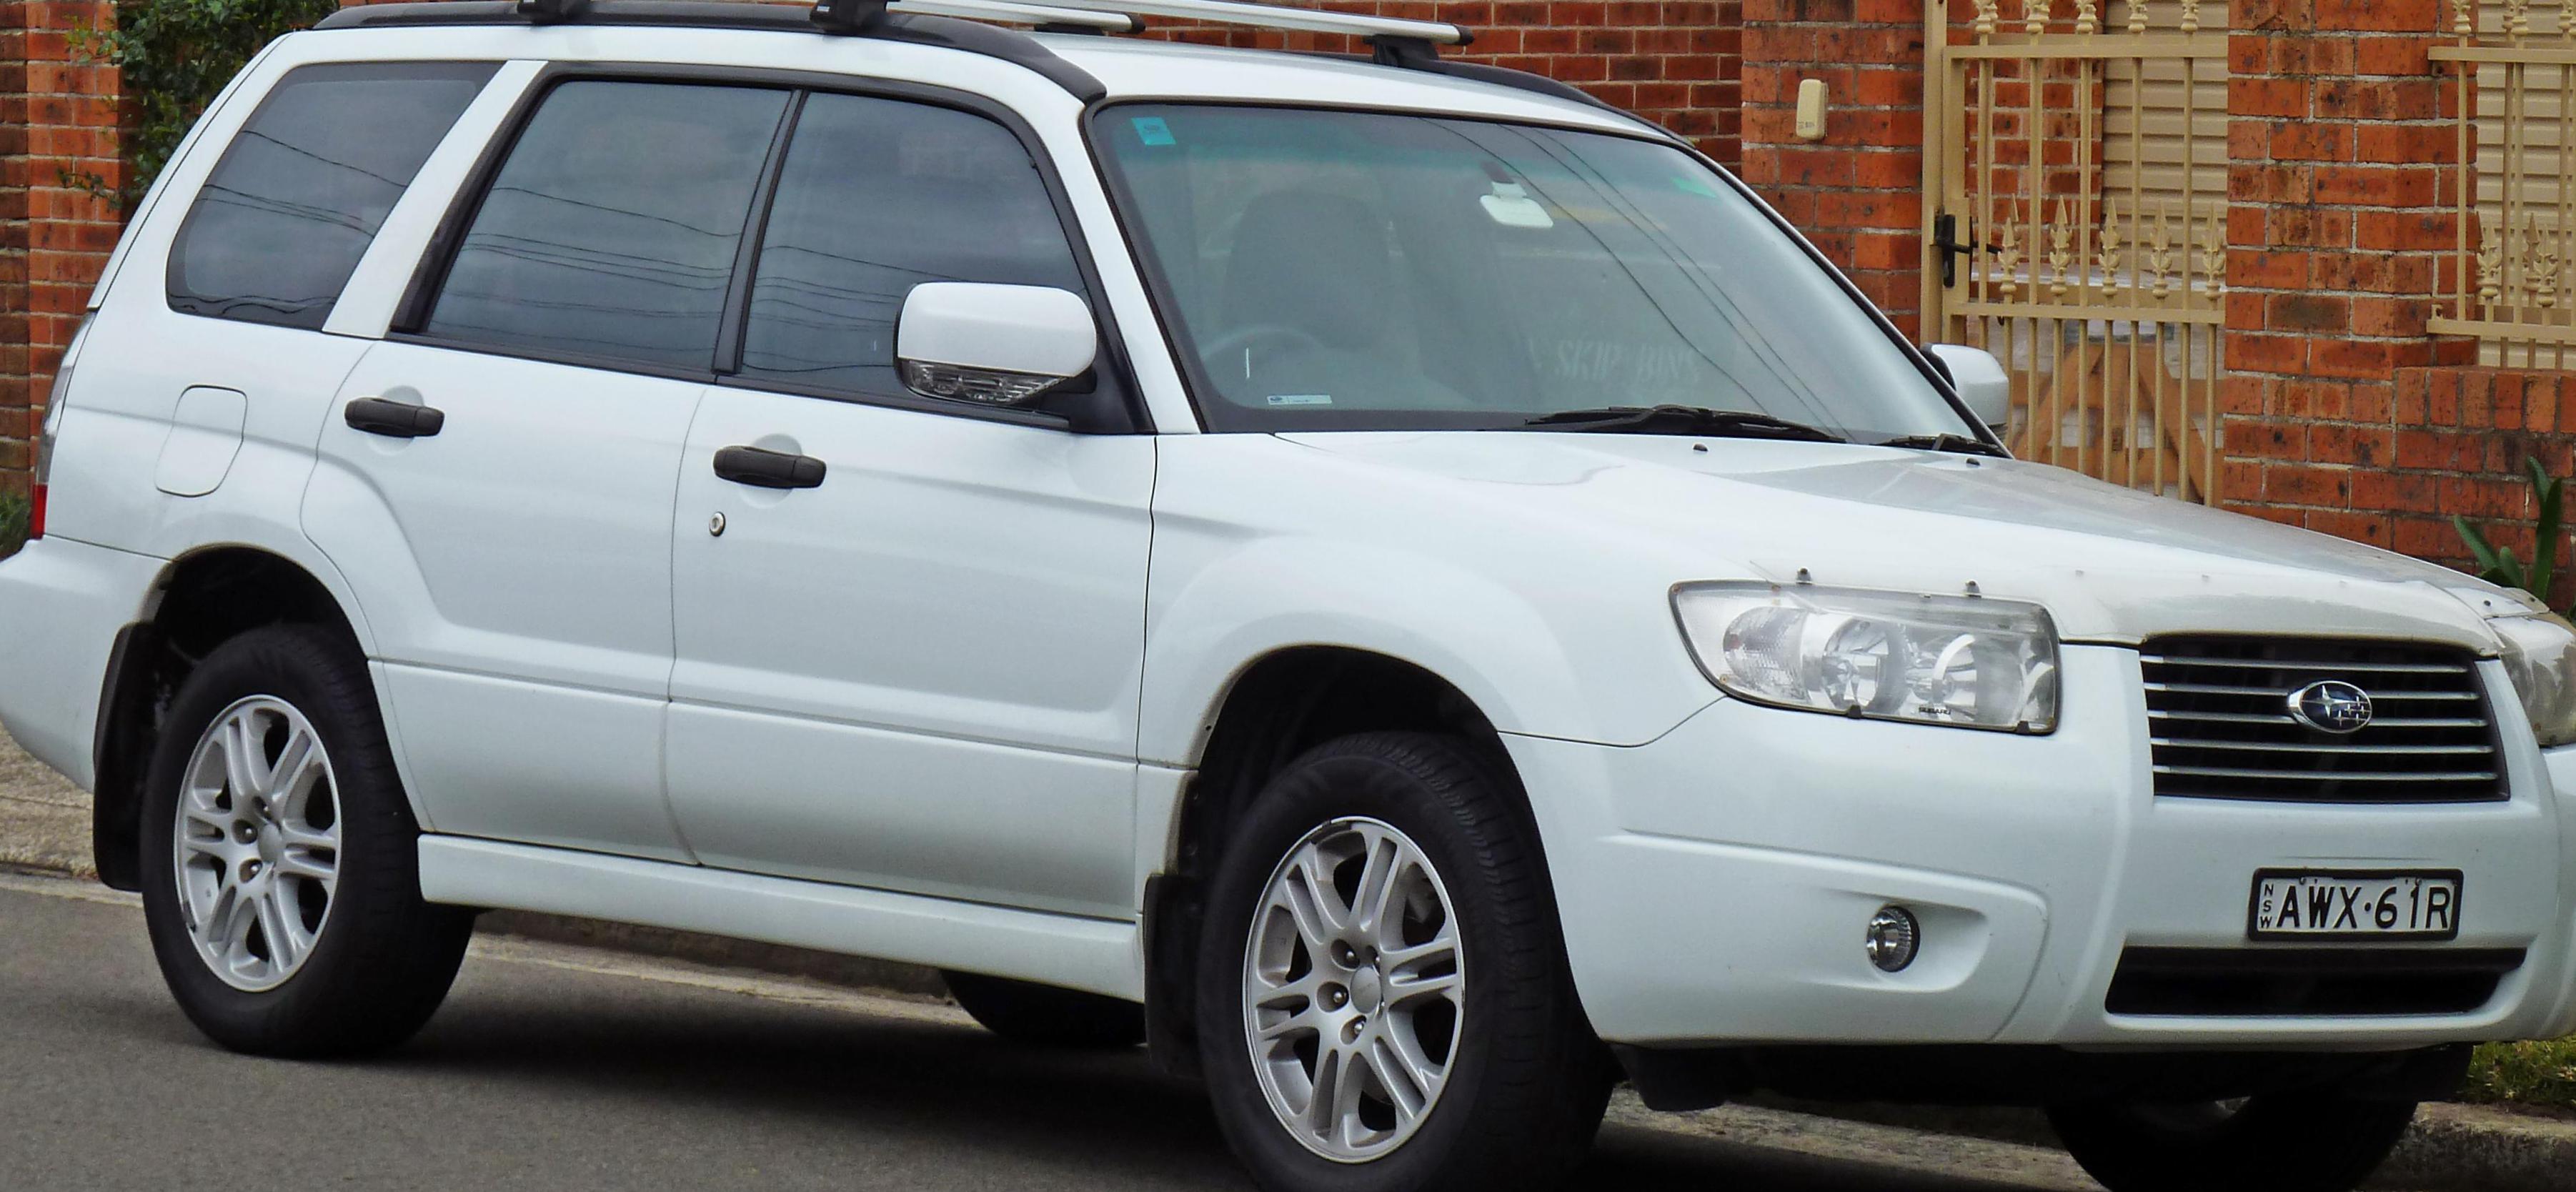 Subaru Forester models 2006